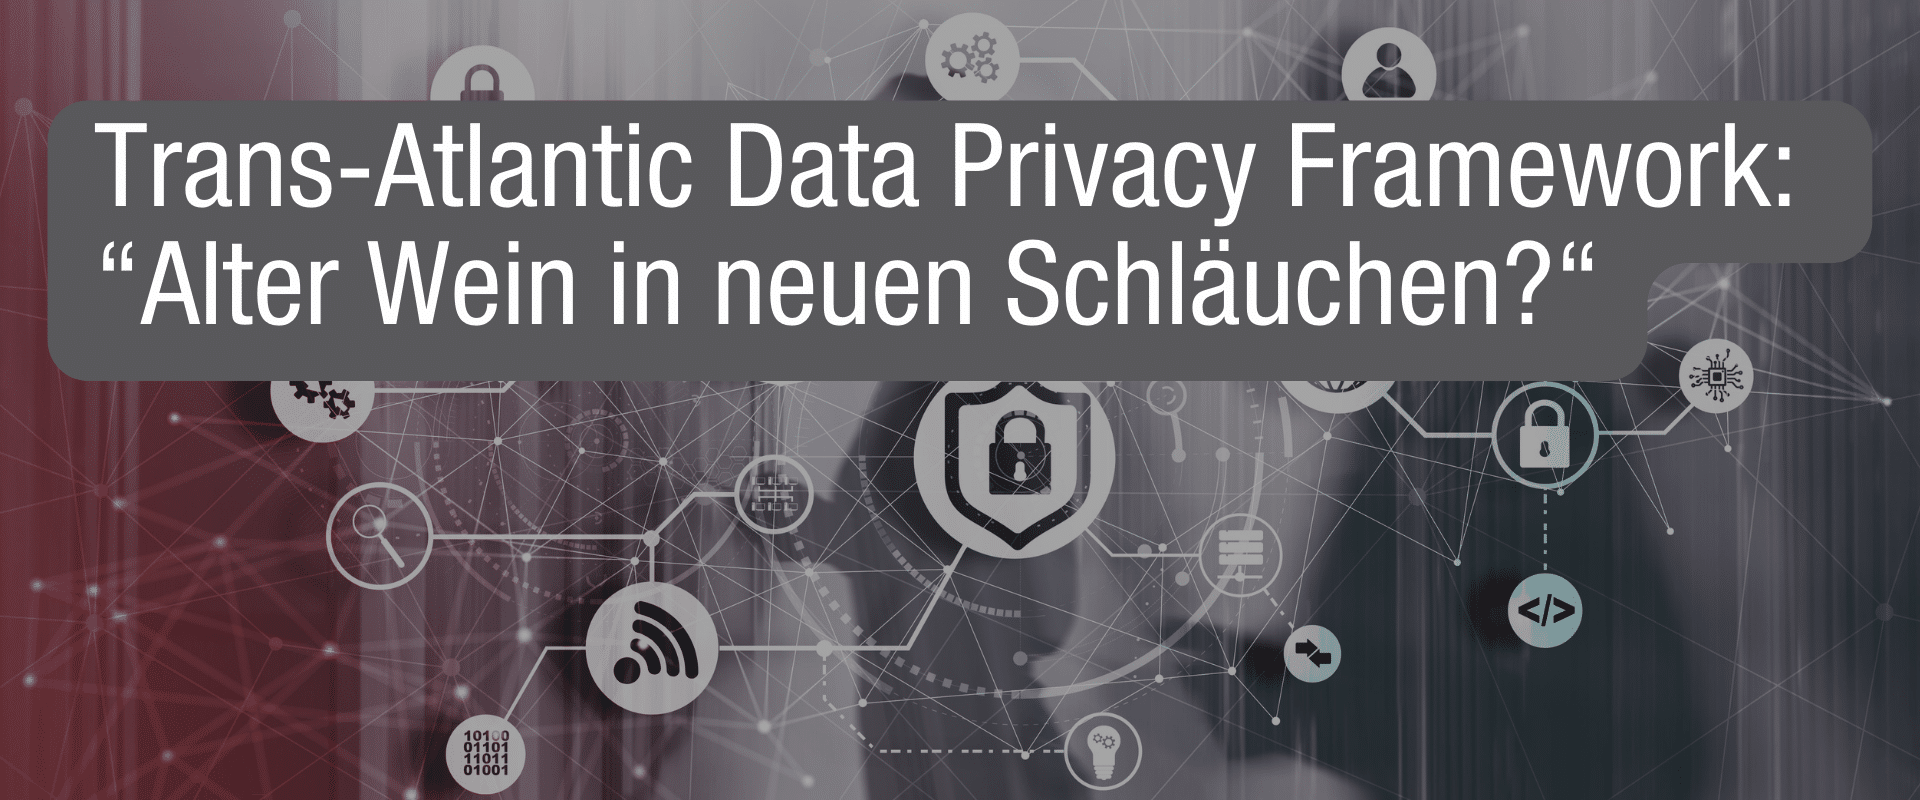 Trans-Atlantic Data Privacy Framework